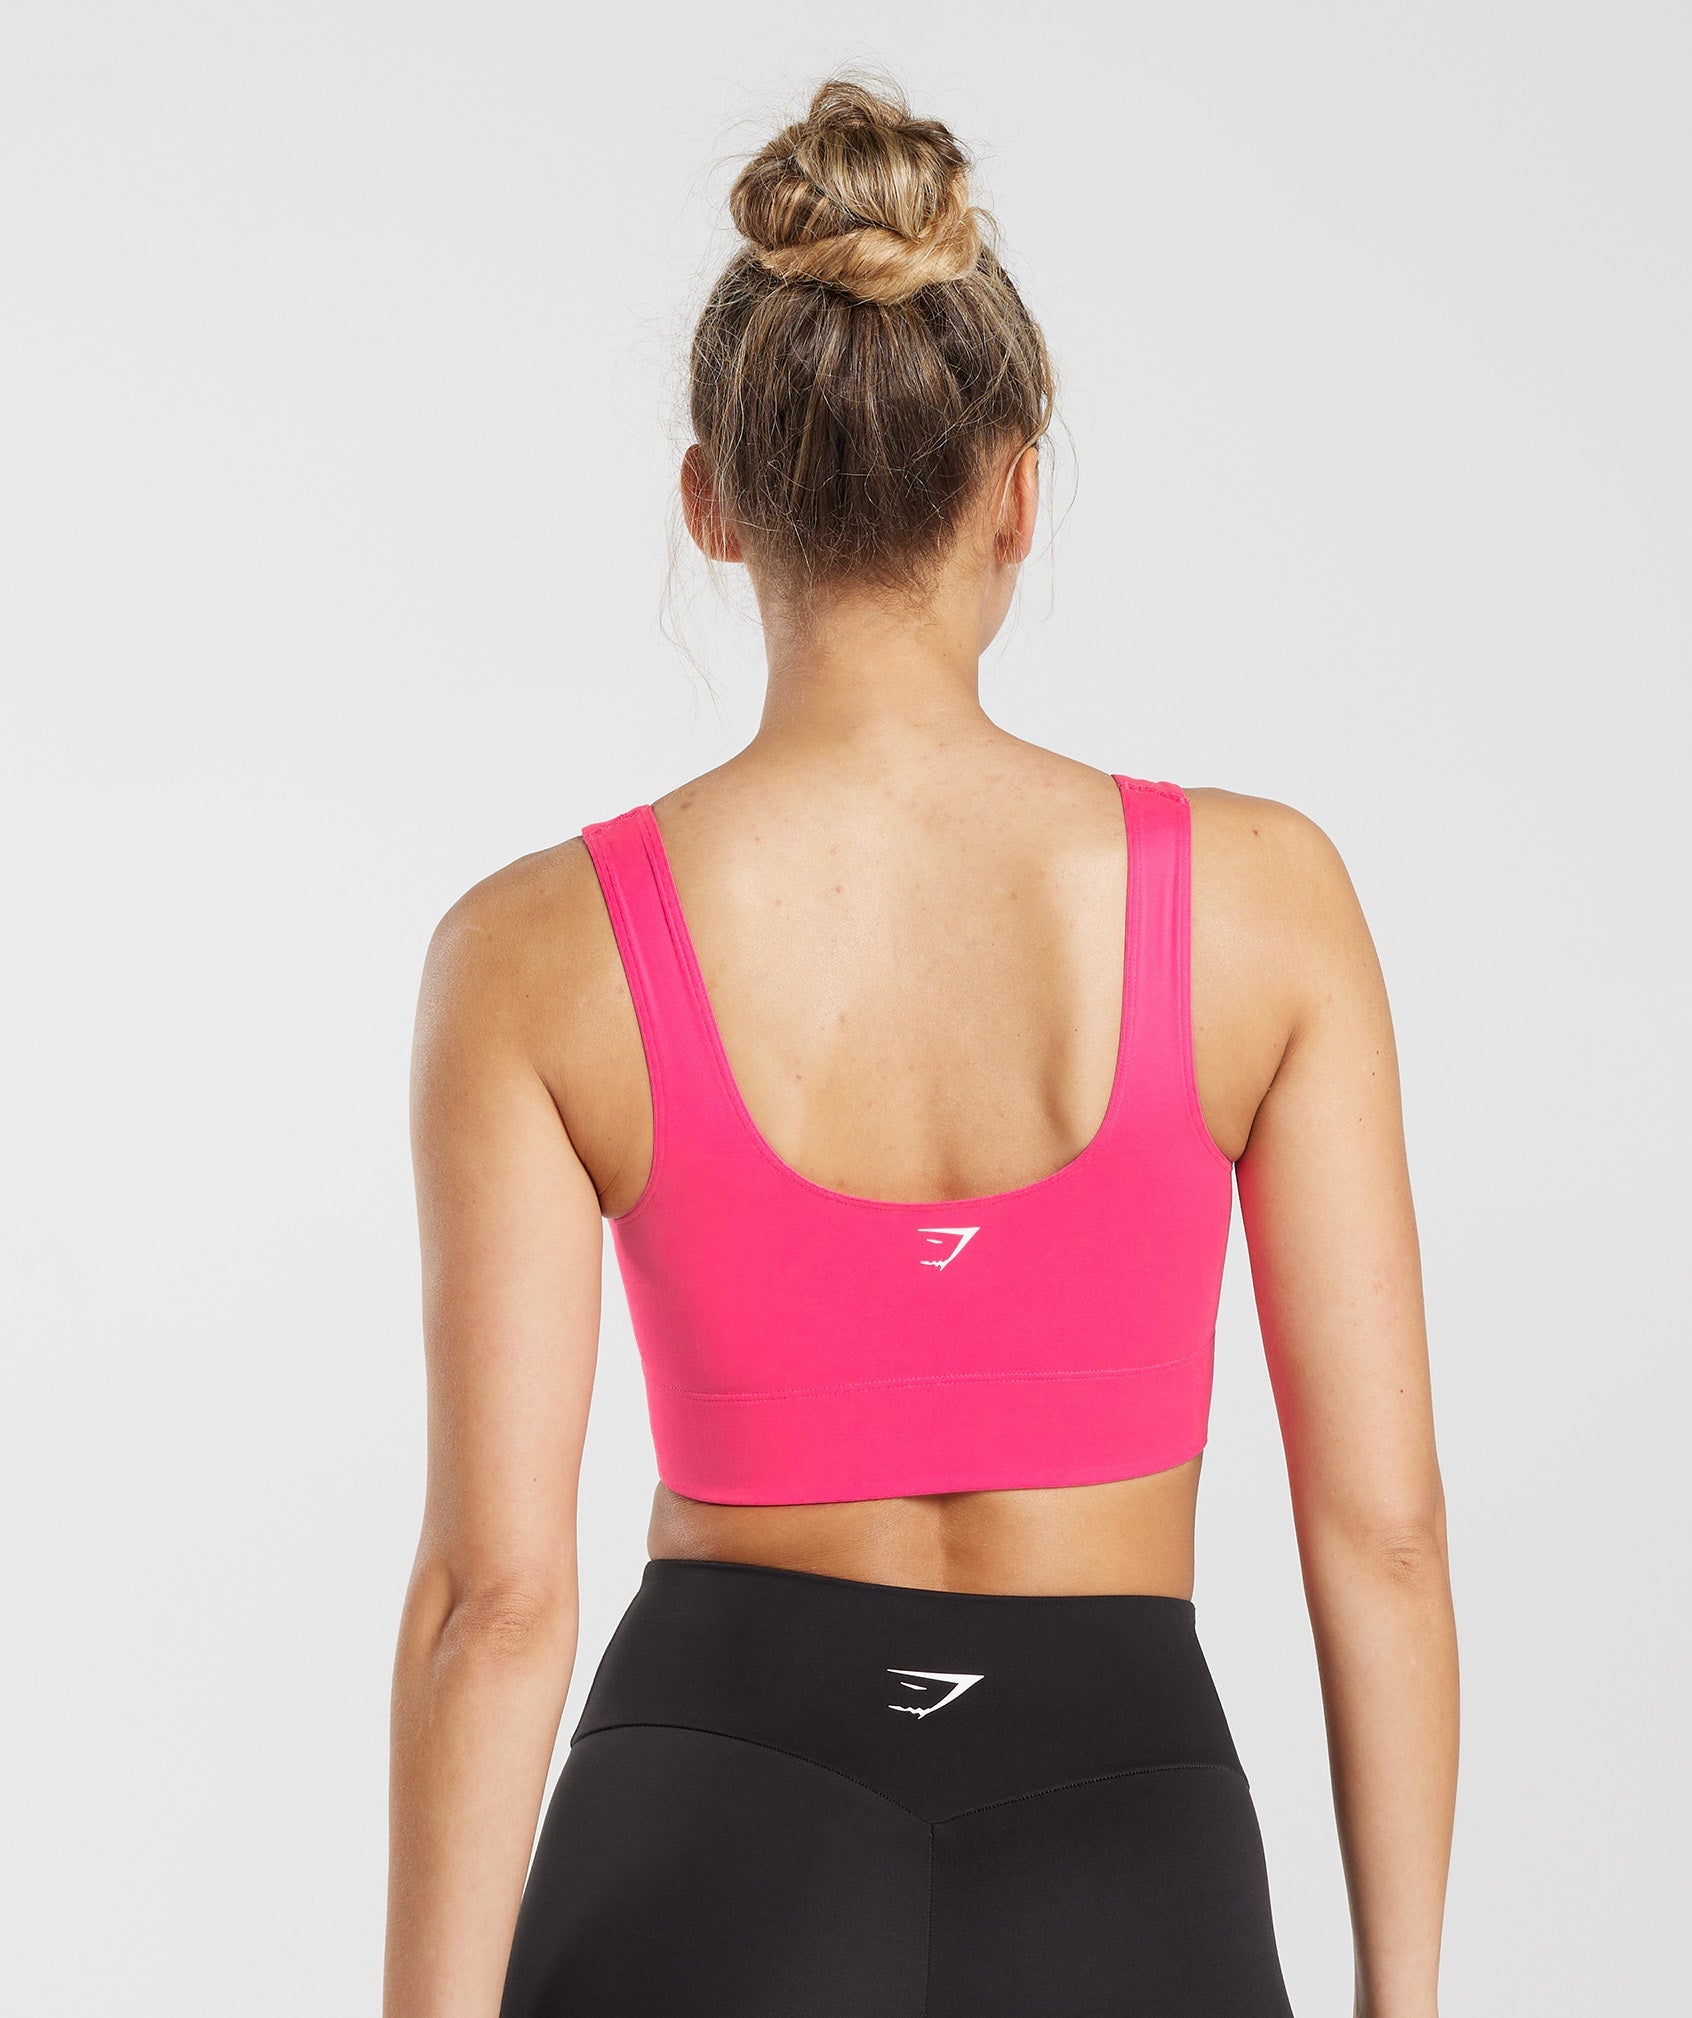 Gymshark GS Power Minimal Sports Bra Pink Size M - $29 (19% Off